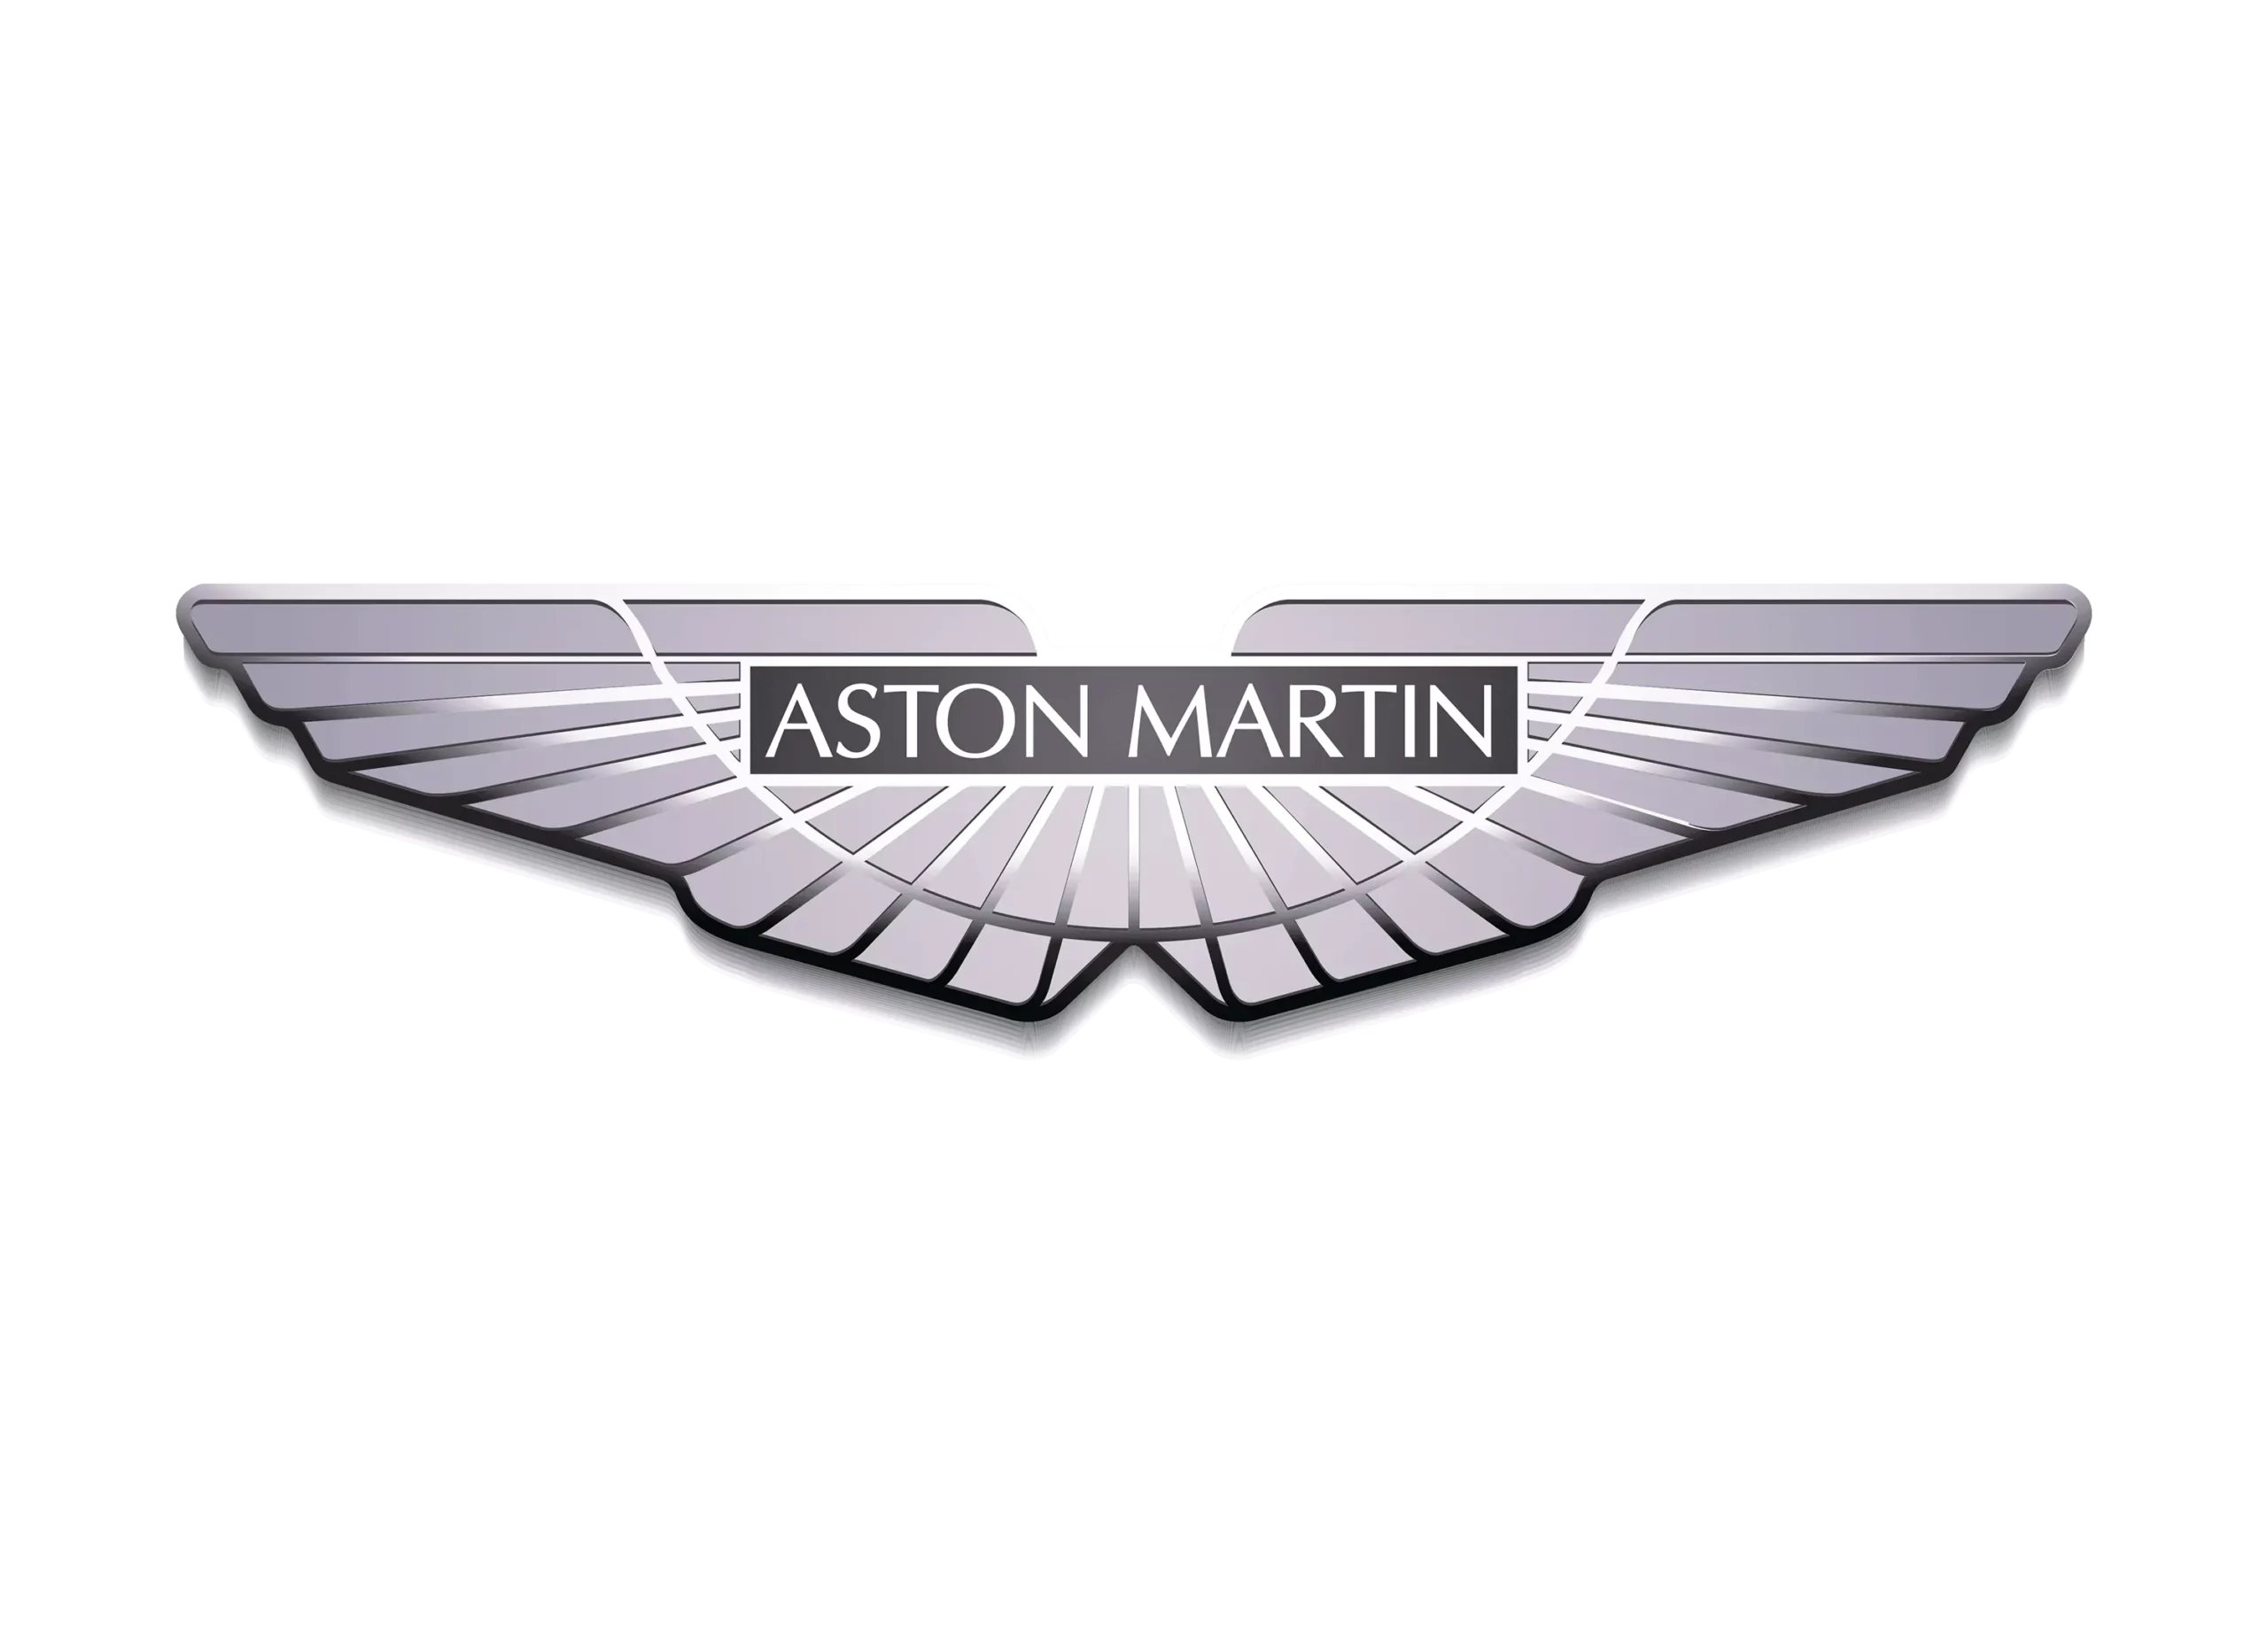 Aston Martin logo 2003-2021